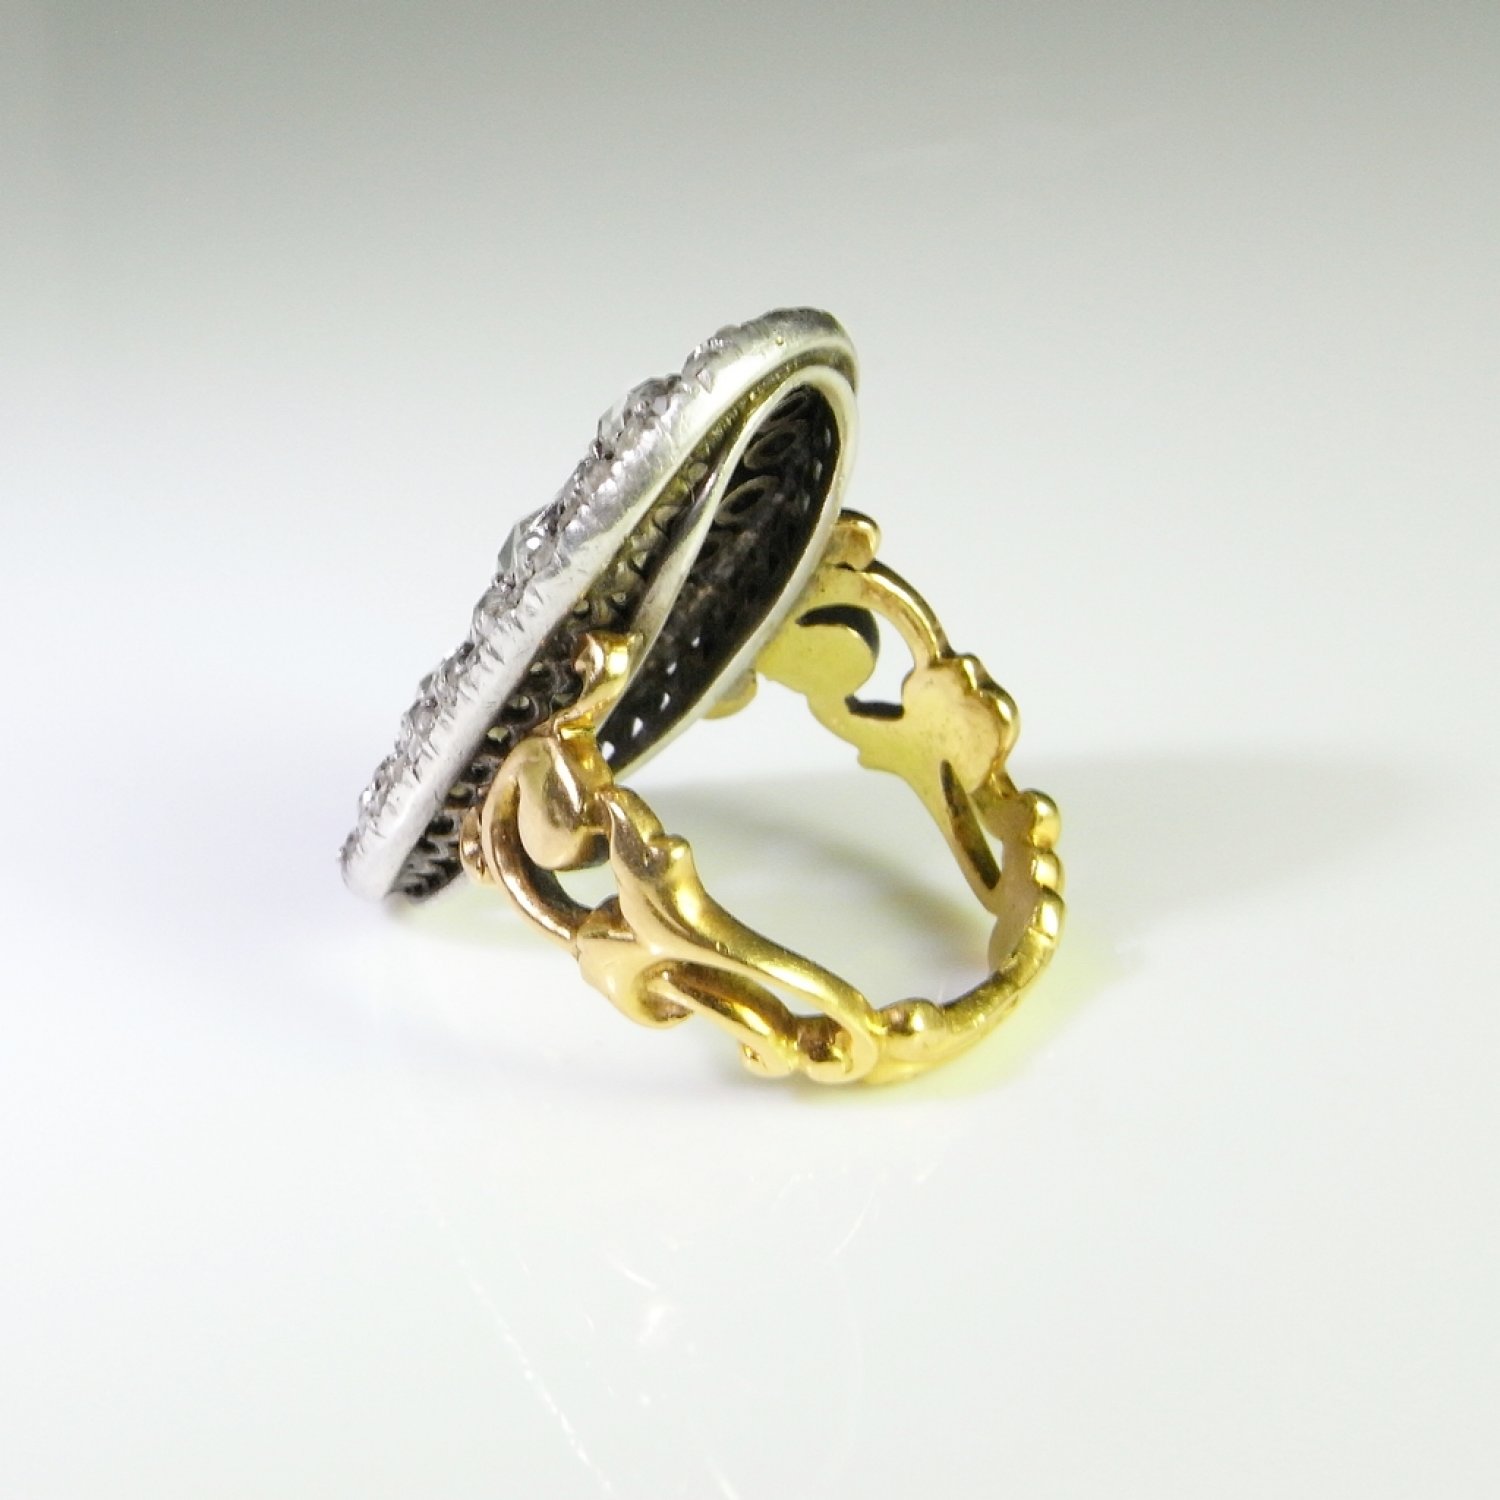 Georgian Ring 4.13 ct Georgian Diamond Ring 18th Century Ring Old Cut Diamond Engagement Ring Wedding Ring Statement Ring Dress Ring Antique Diamond Ring Panel Ring Museum Quality Cluster Diamond Ring